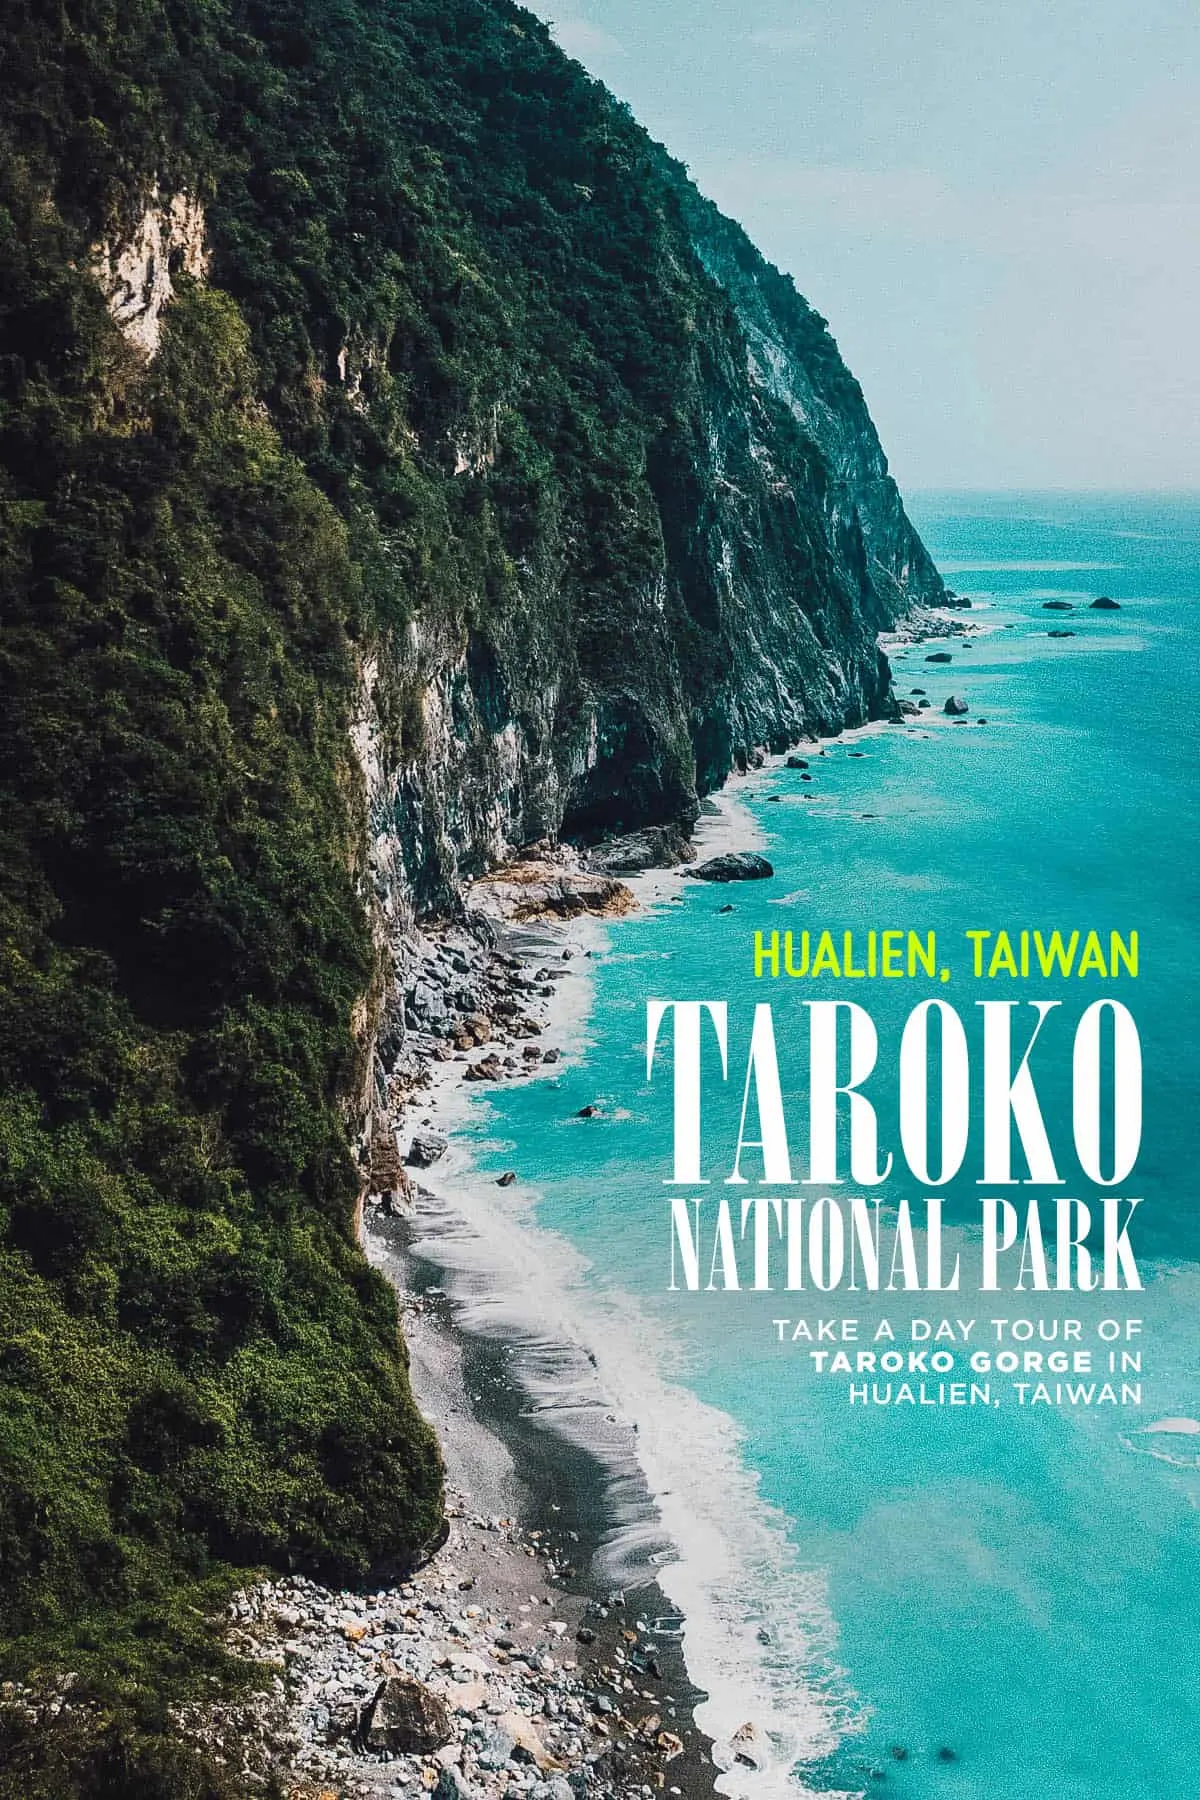 Qingshui Cliff at Taroko National Park in Hualien, Taiwan